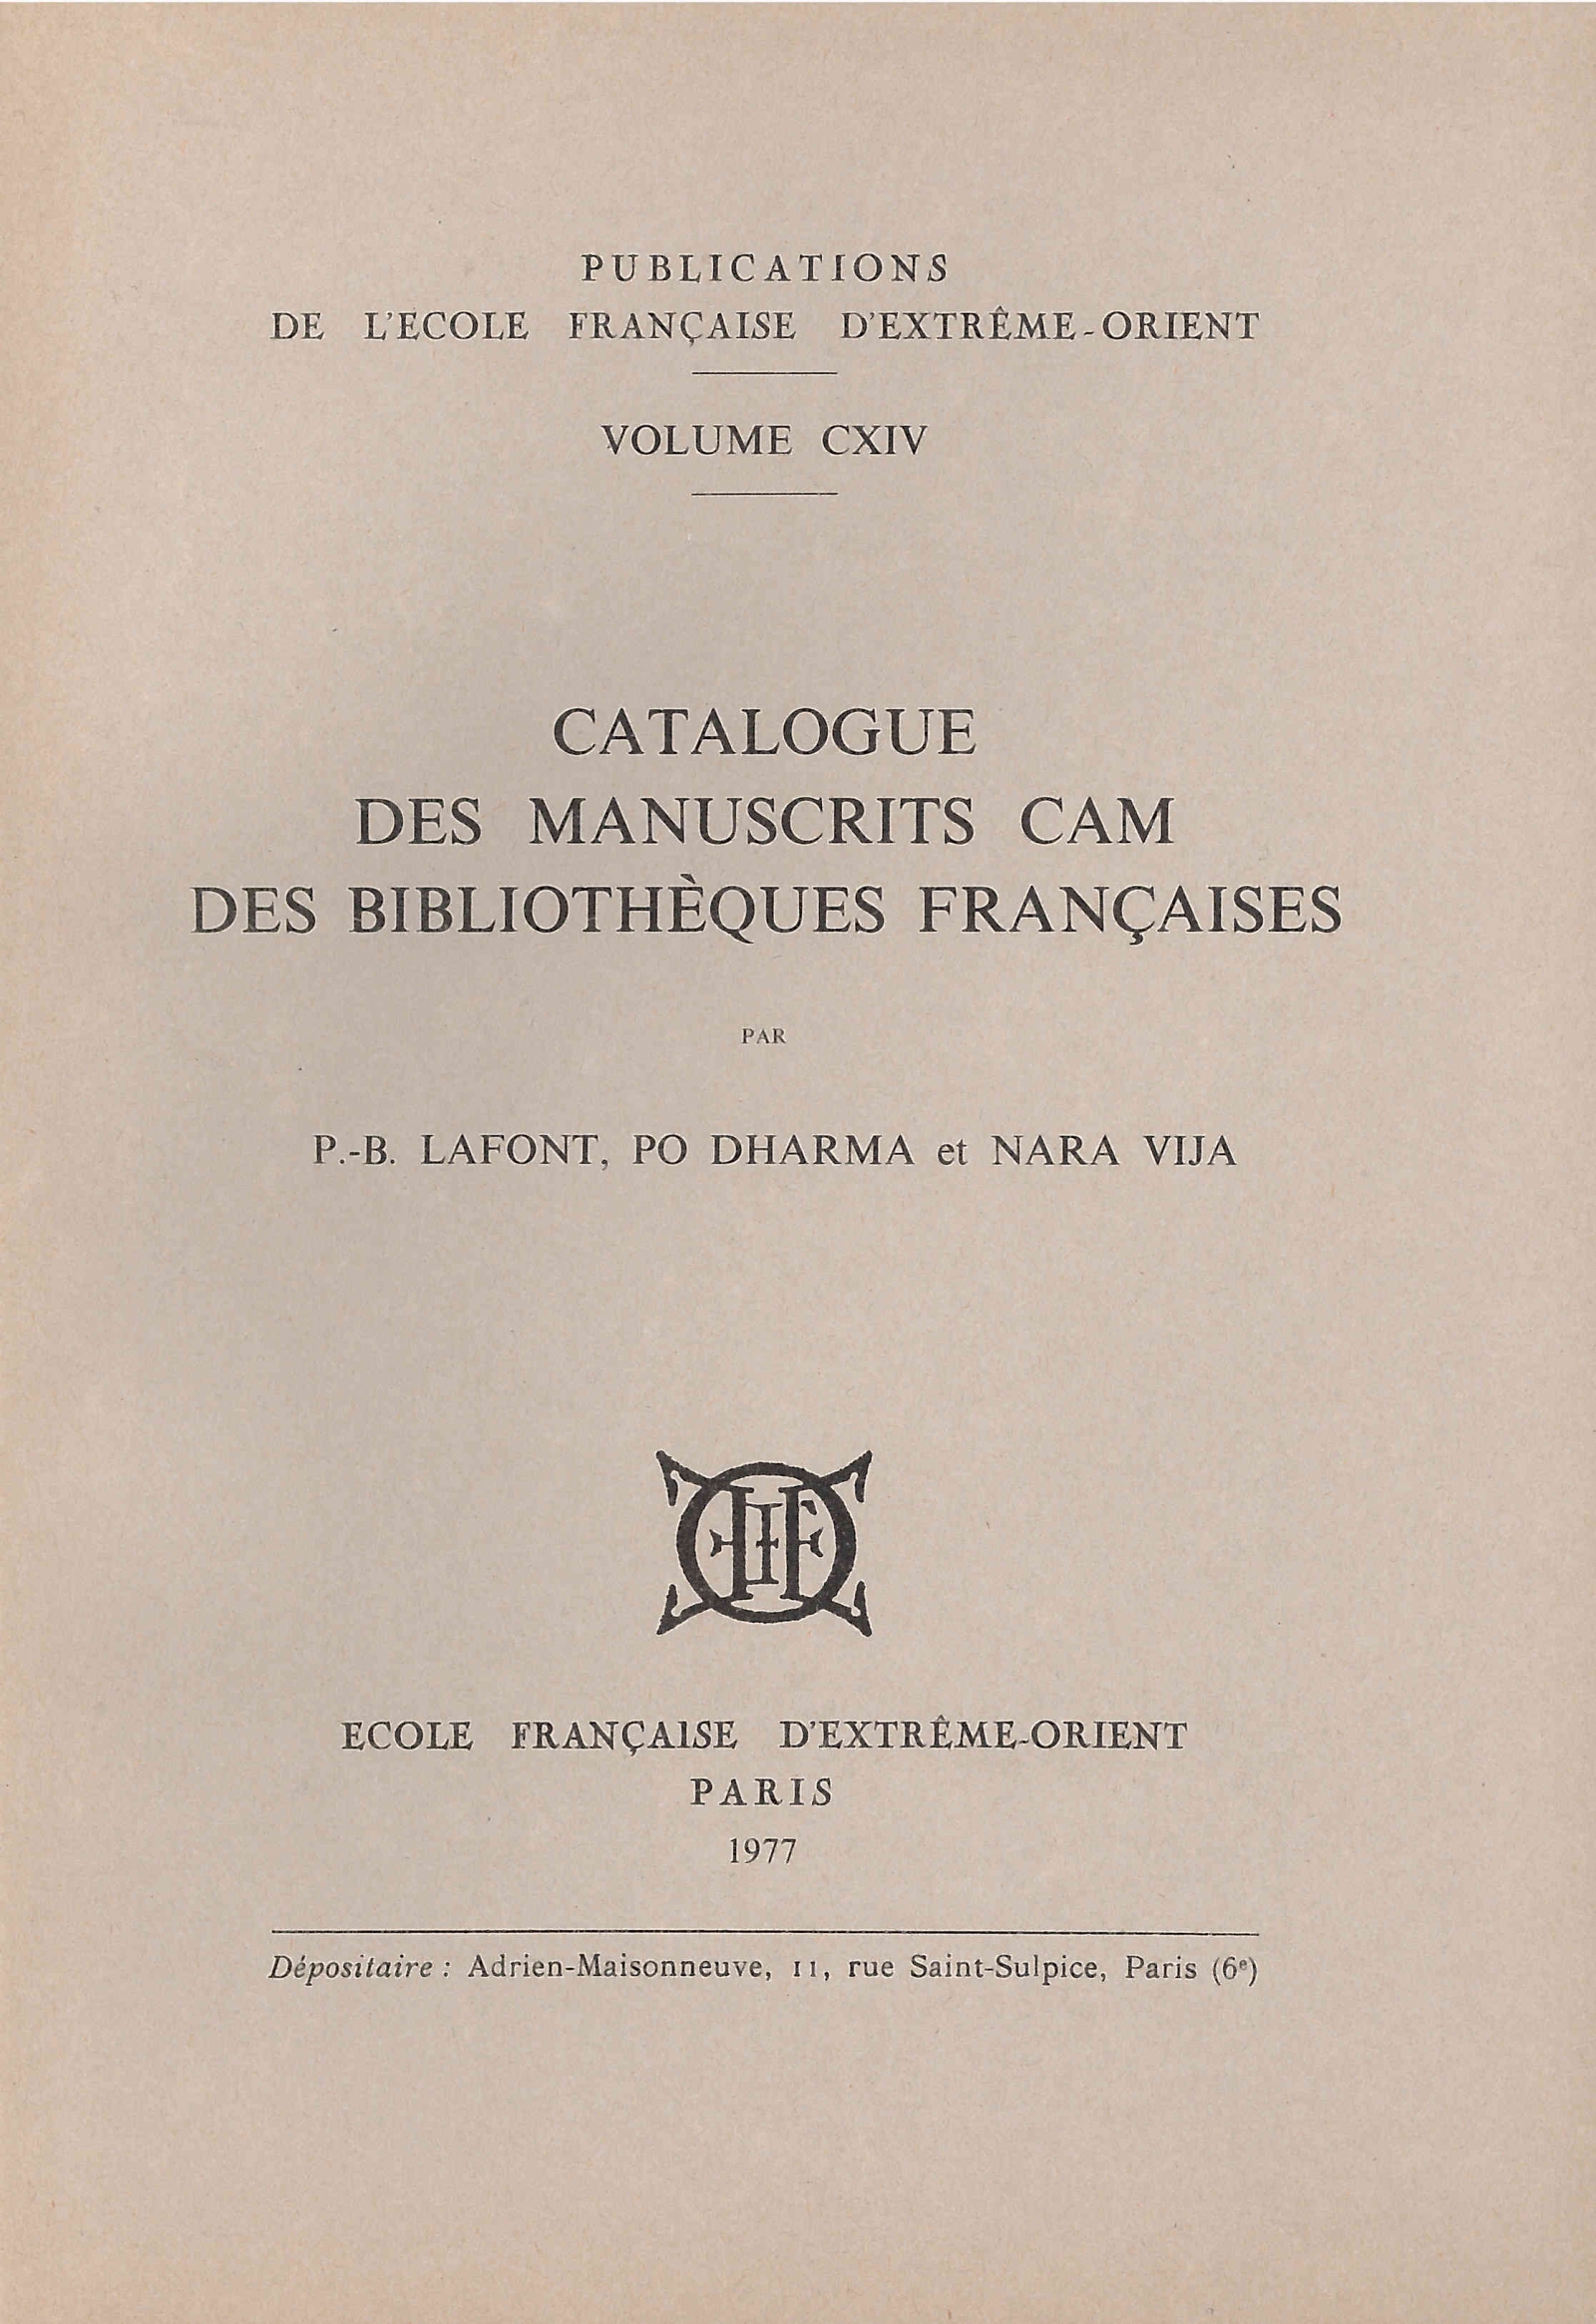 Catalogue des manuscrits Cam des bibliothèques françaises